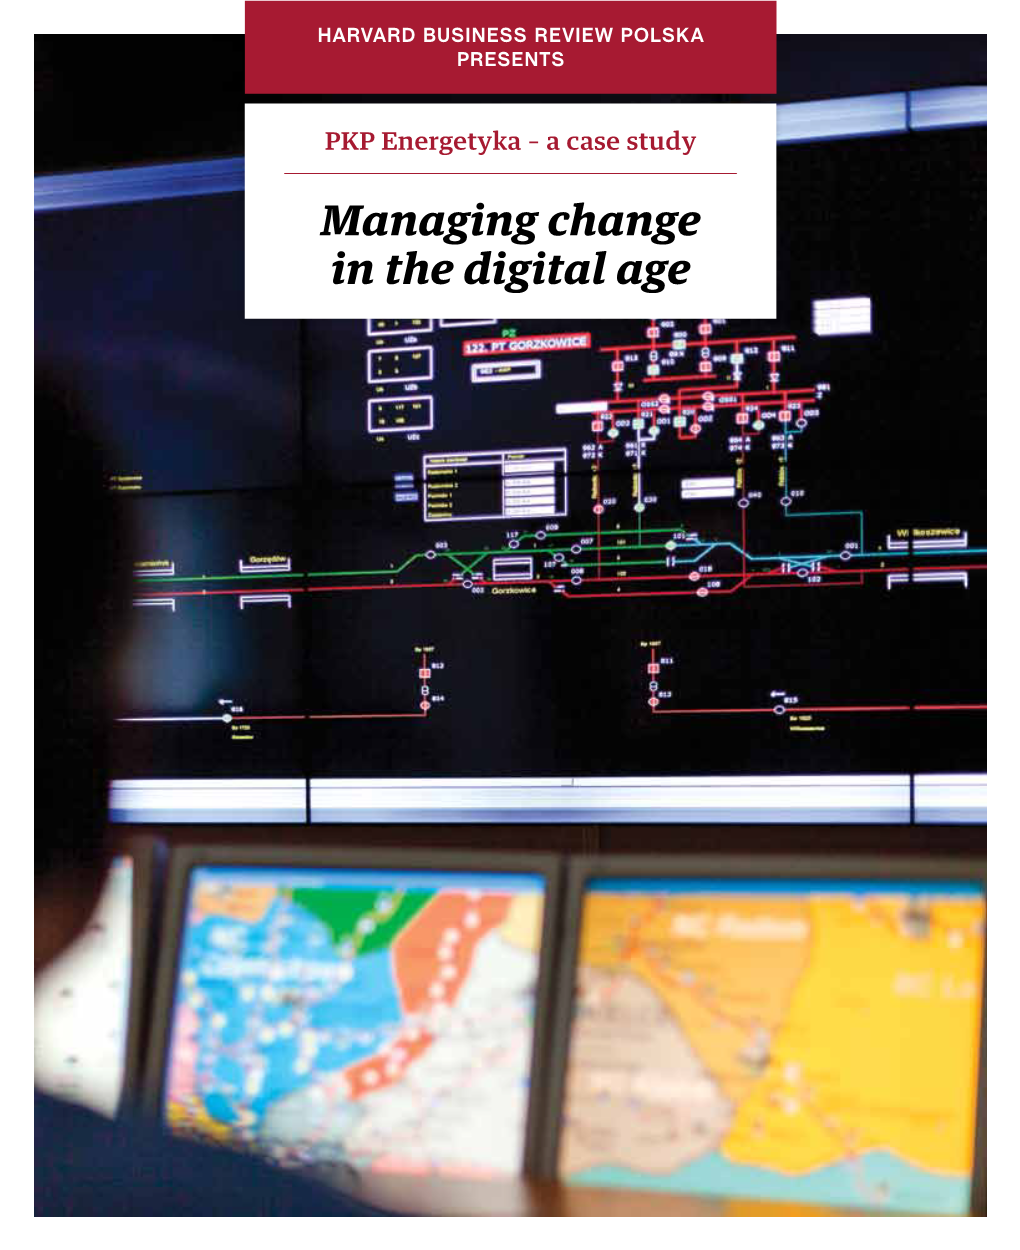 Managing Change in the Digital Age EDITOR-IN-CHIEF GRAPHIC DESIGNER, DTP Paweł Kubisiak Alicja Gliwa